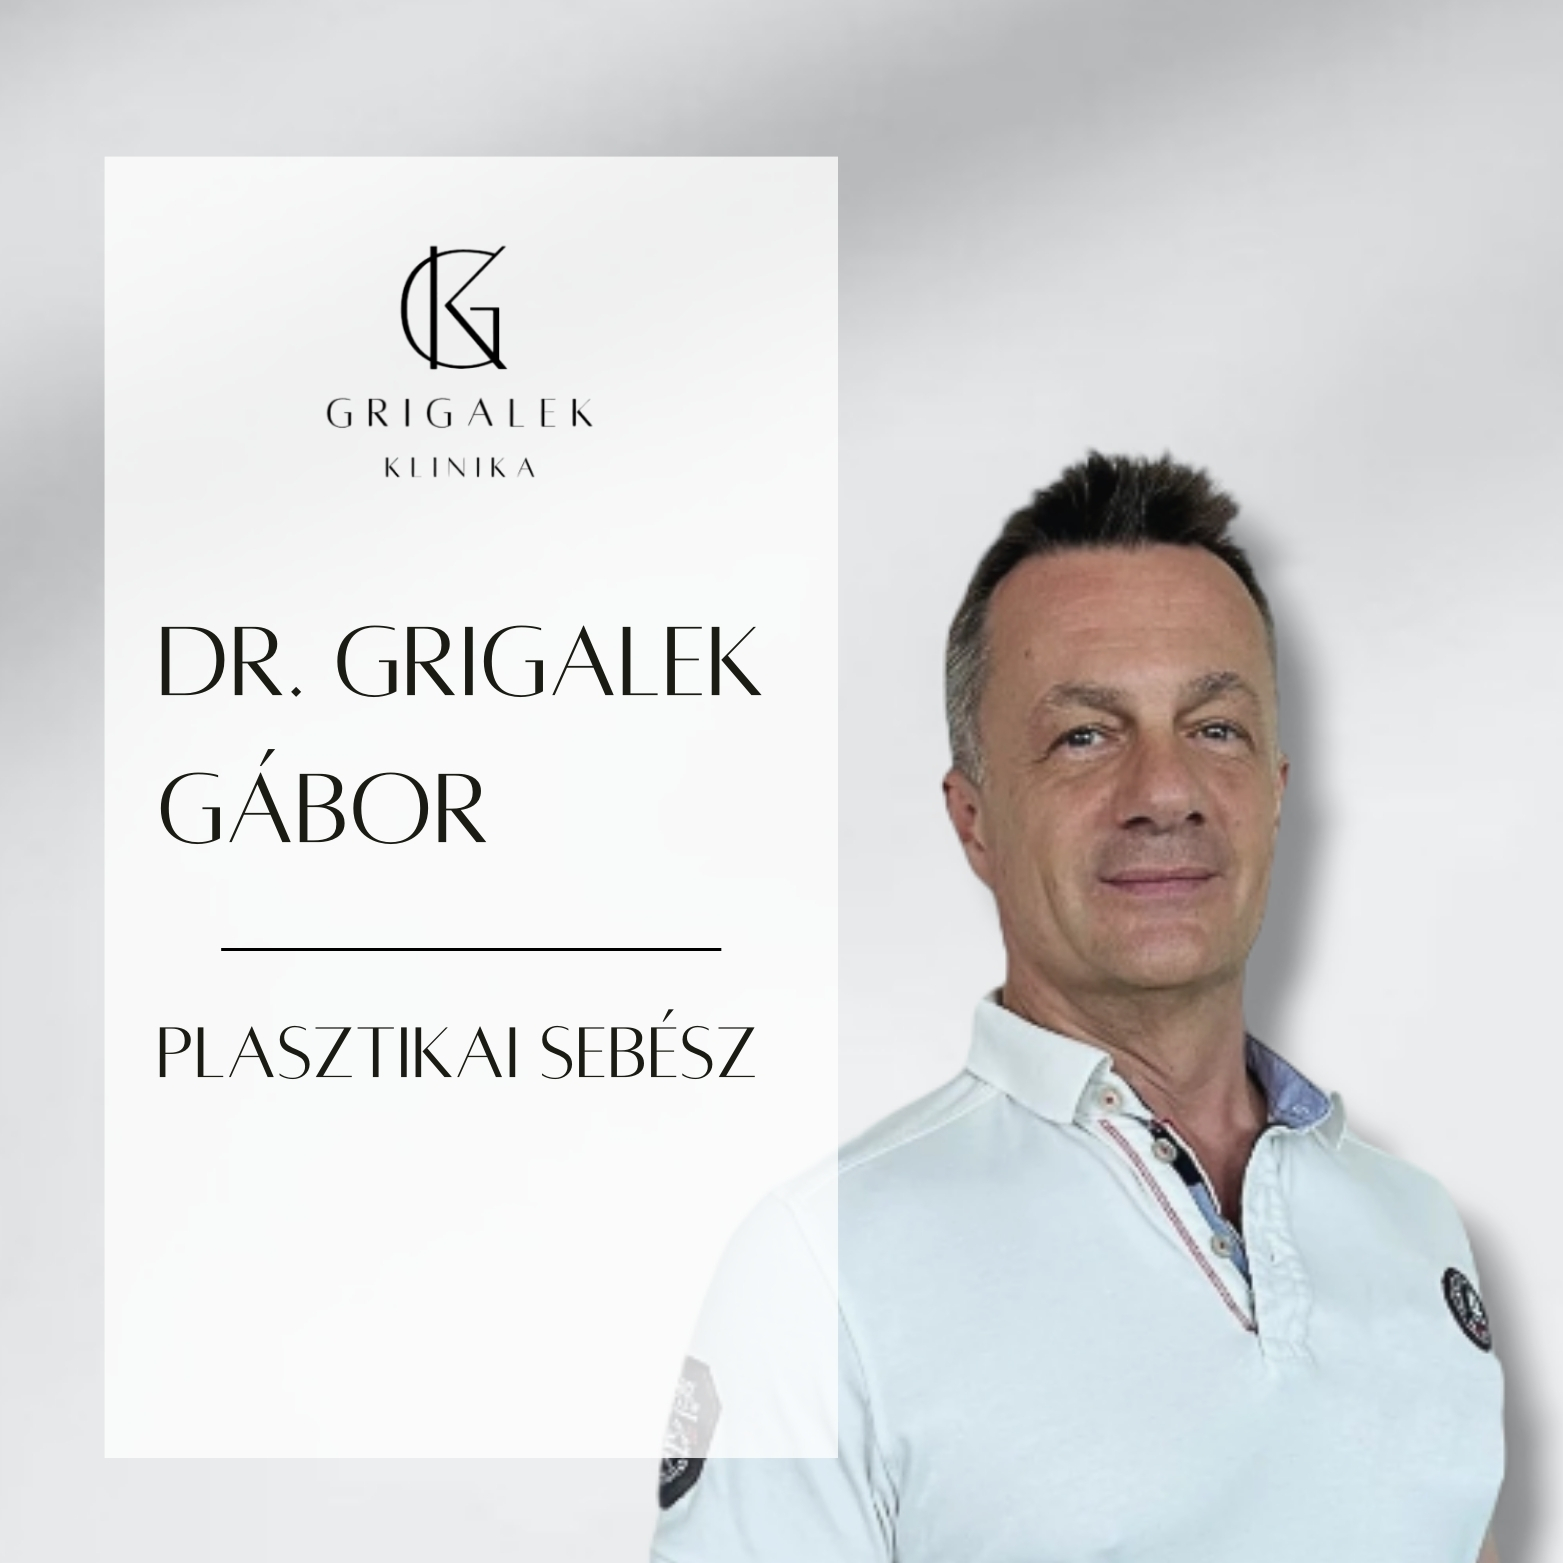 Dr. Grigalek Gábor